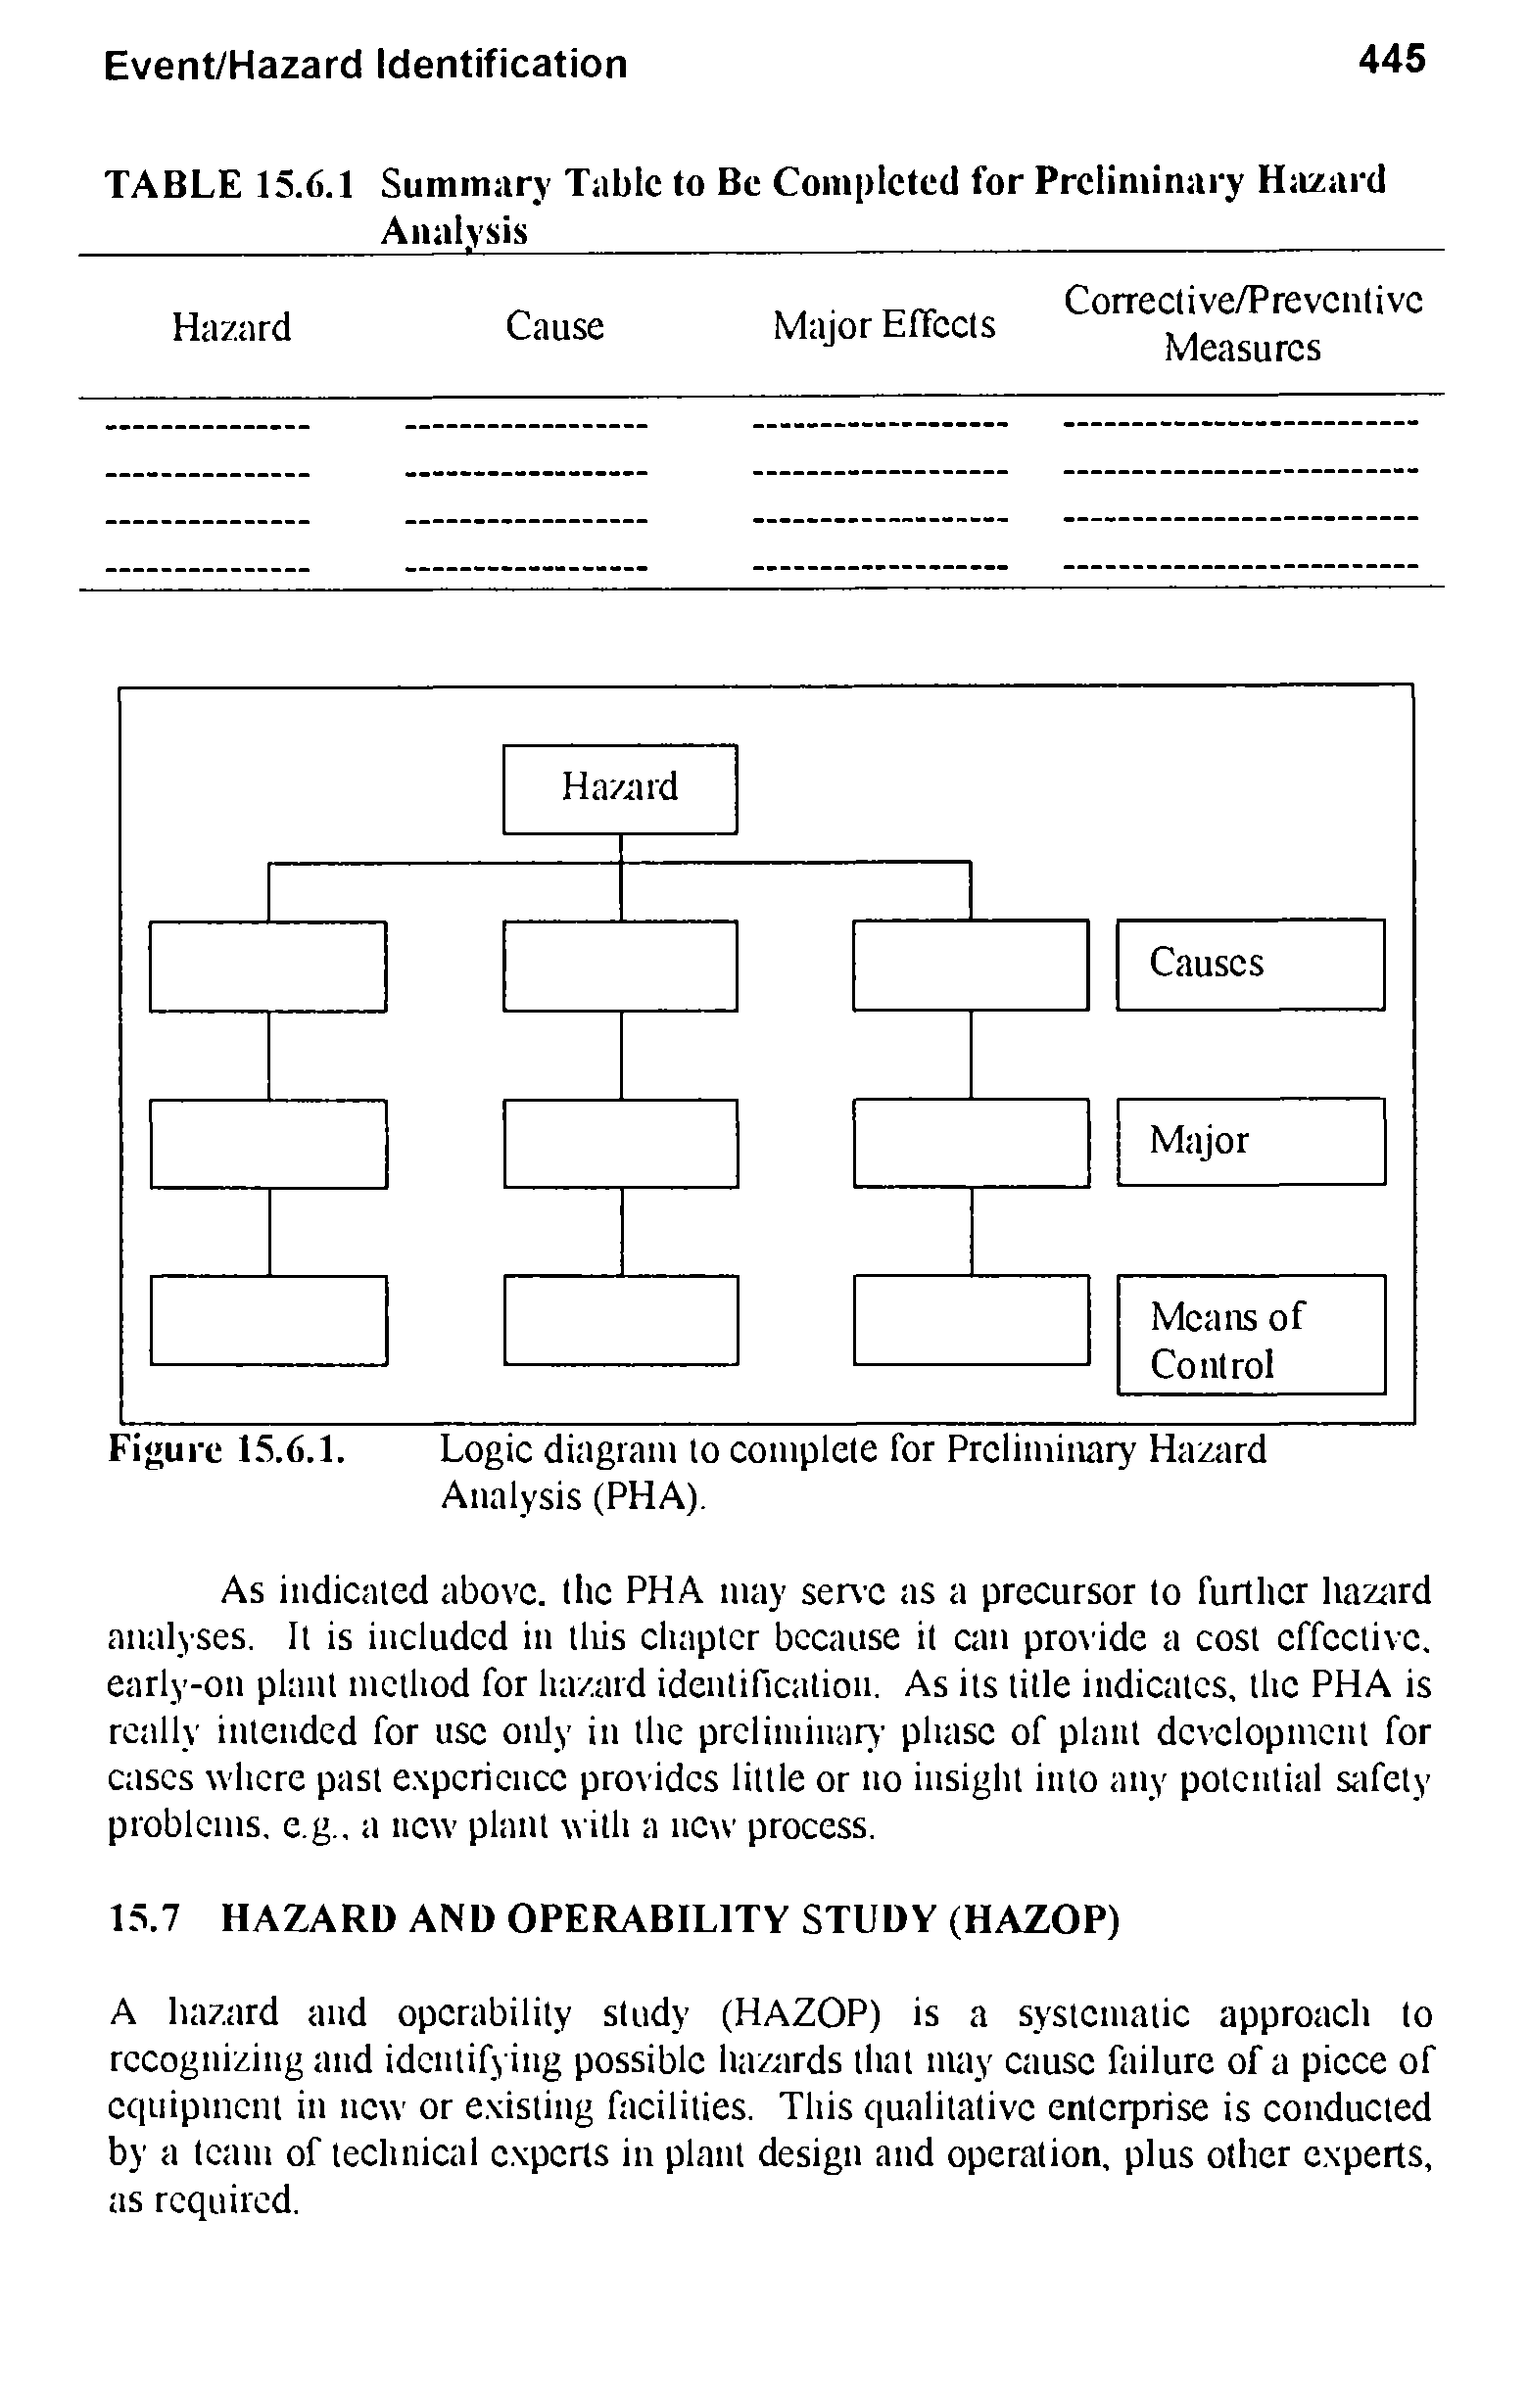 Figure 15.6.1. Logic diagram lo couiplele for Preliminary Hazard Analysis (PHA).